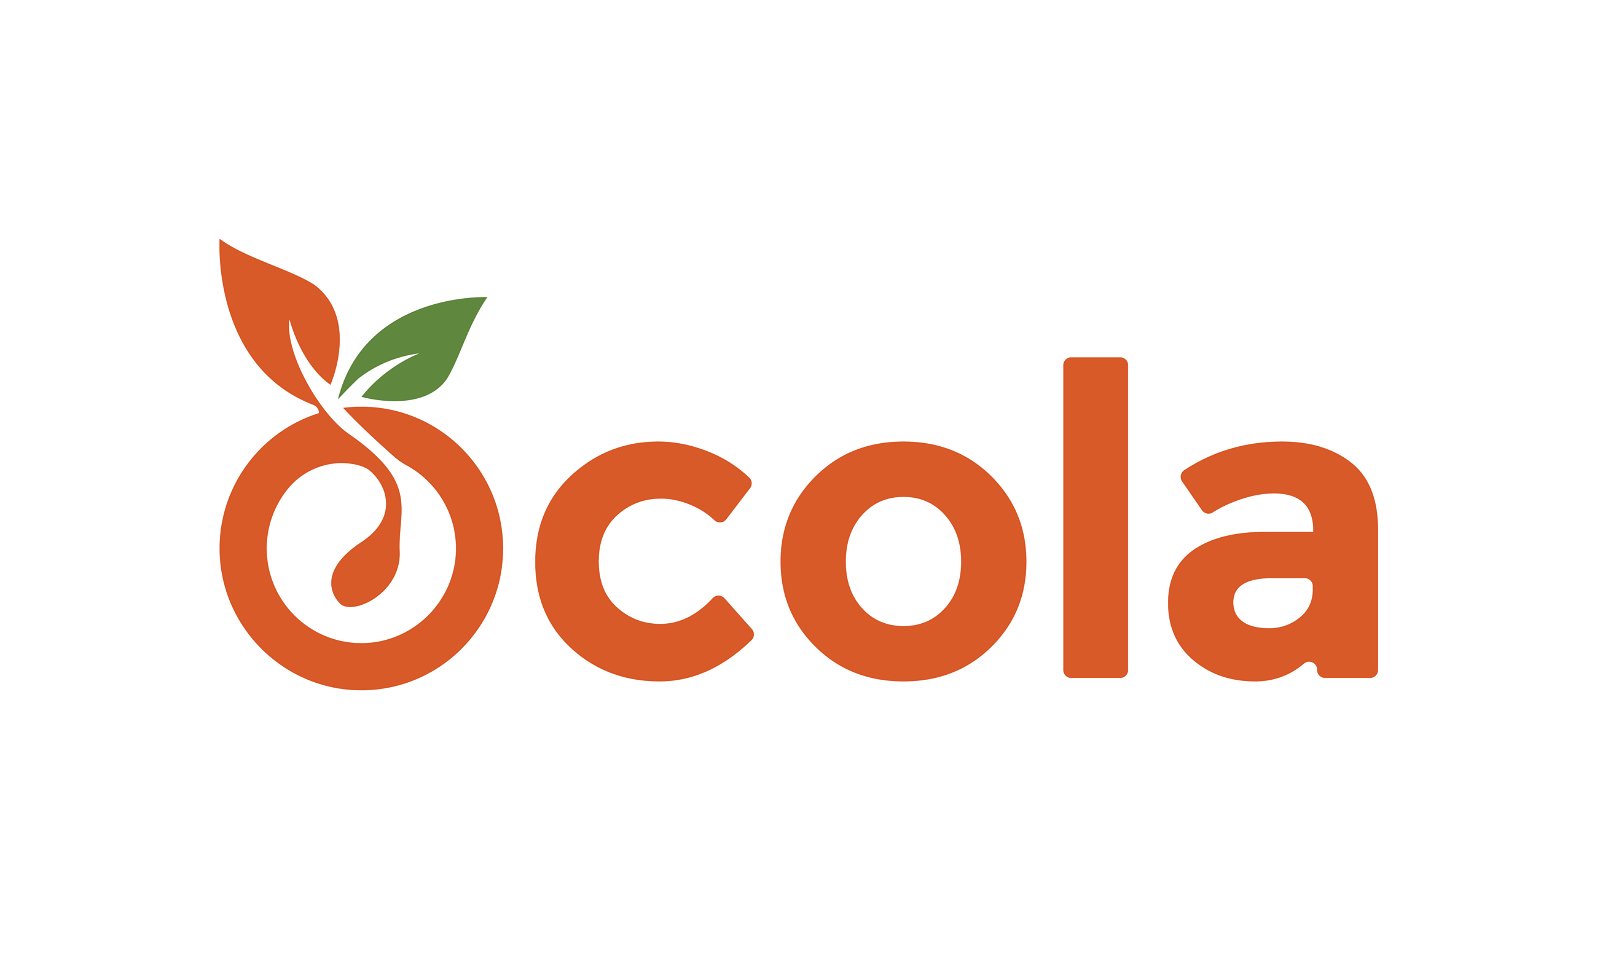 Ocola.com - Creative brandable domain for sale